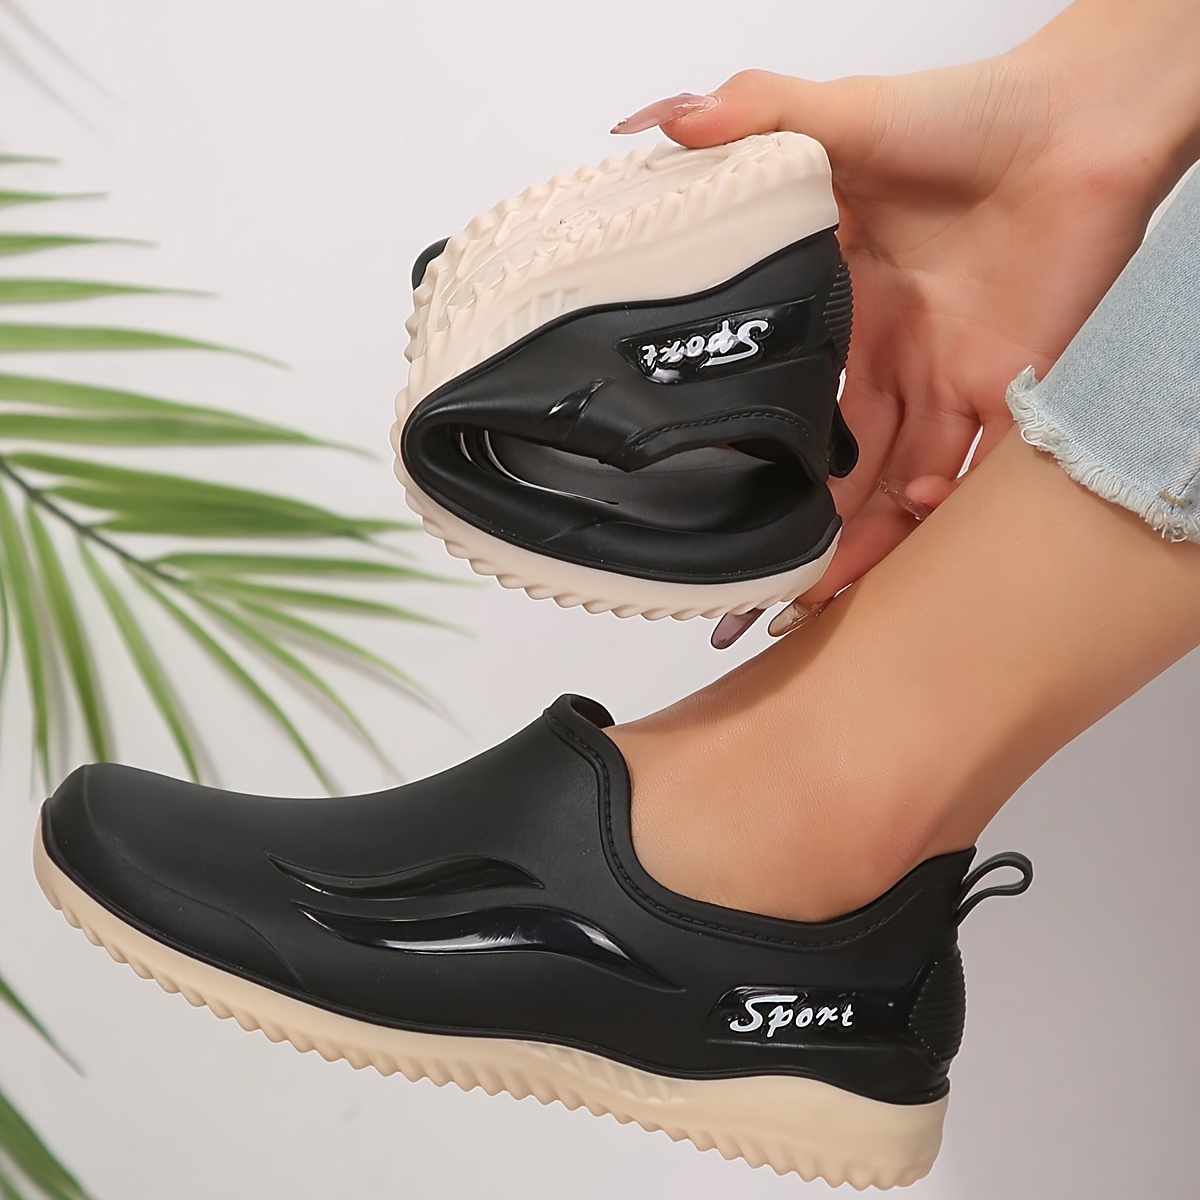 

Women's Jelly Ultra-soft Rain Shoes, Pvc Waterproof Slip-on Loafers, Casual Outdoor Walking Flats